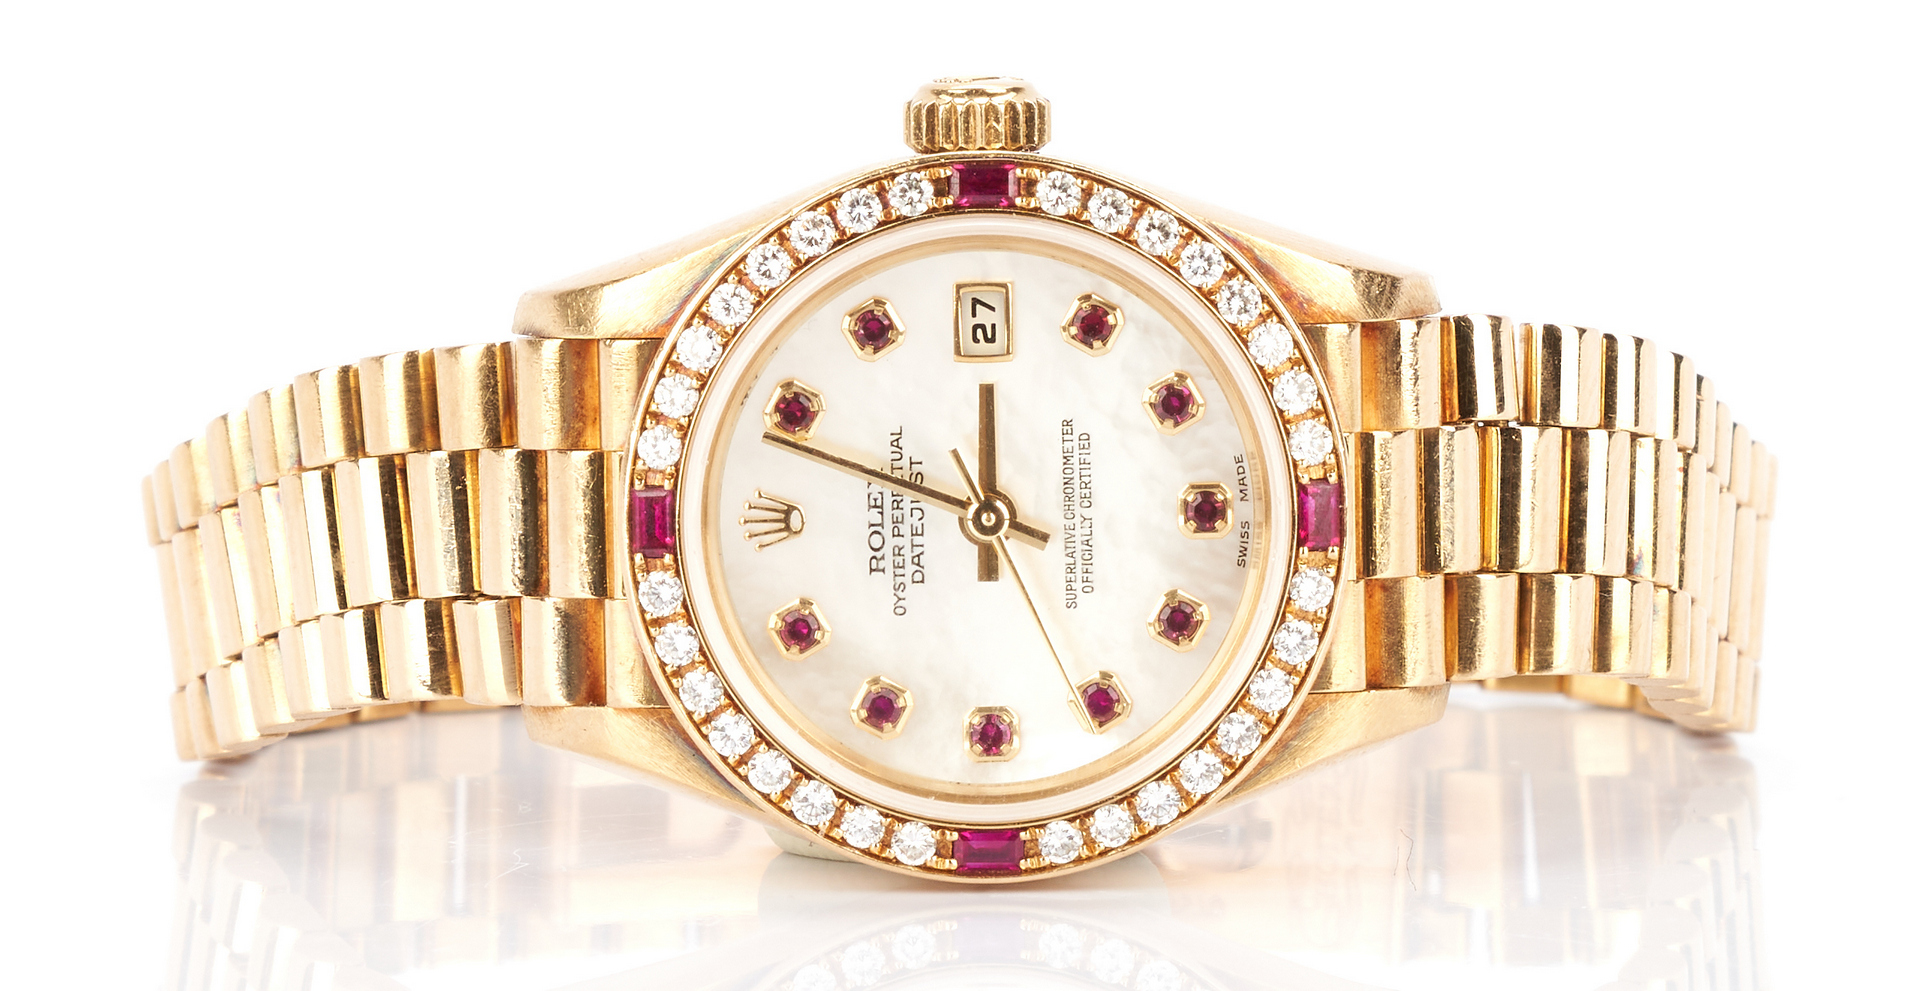 Lot 43: Ladies 18K Rolex Watch w/ Diamond & Ruby Bezel